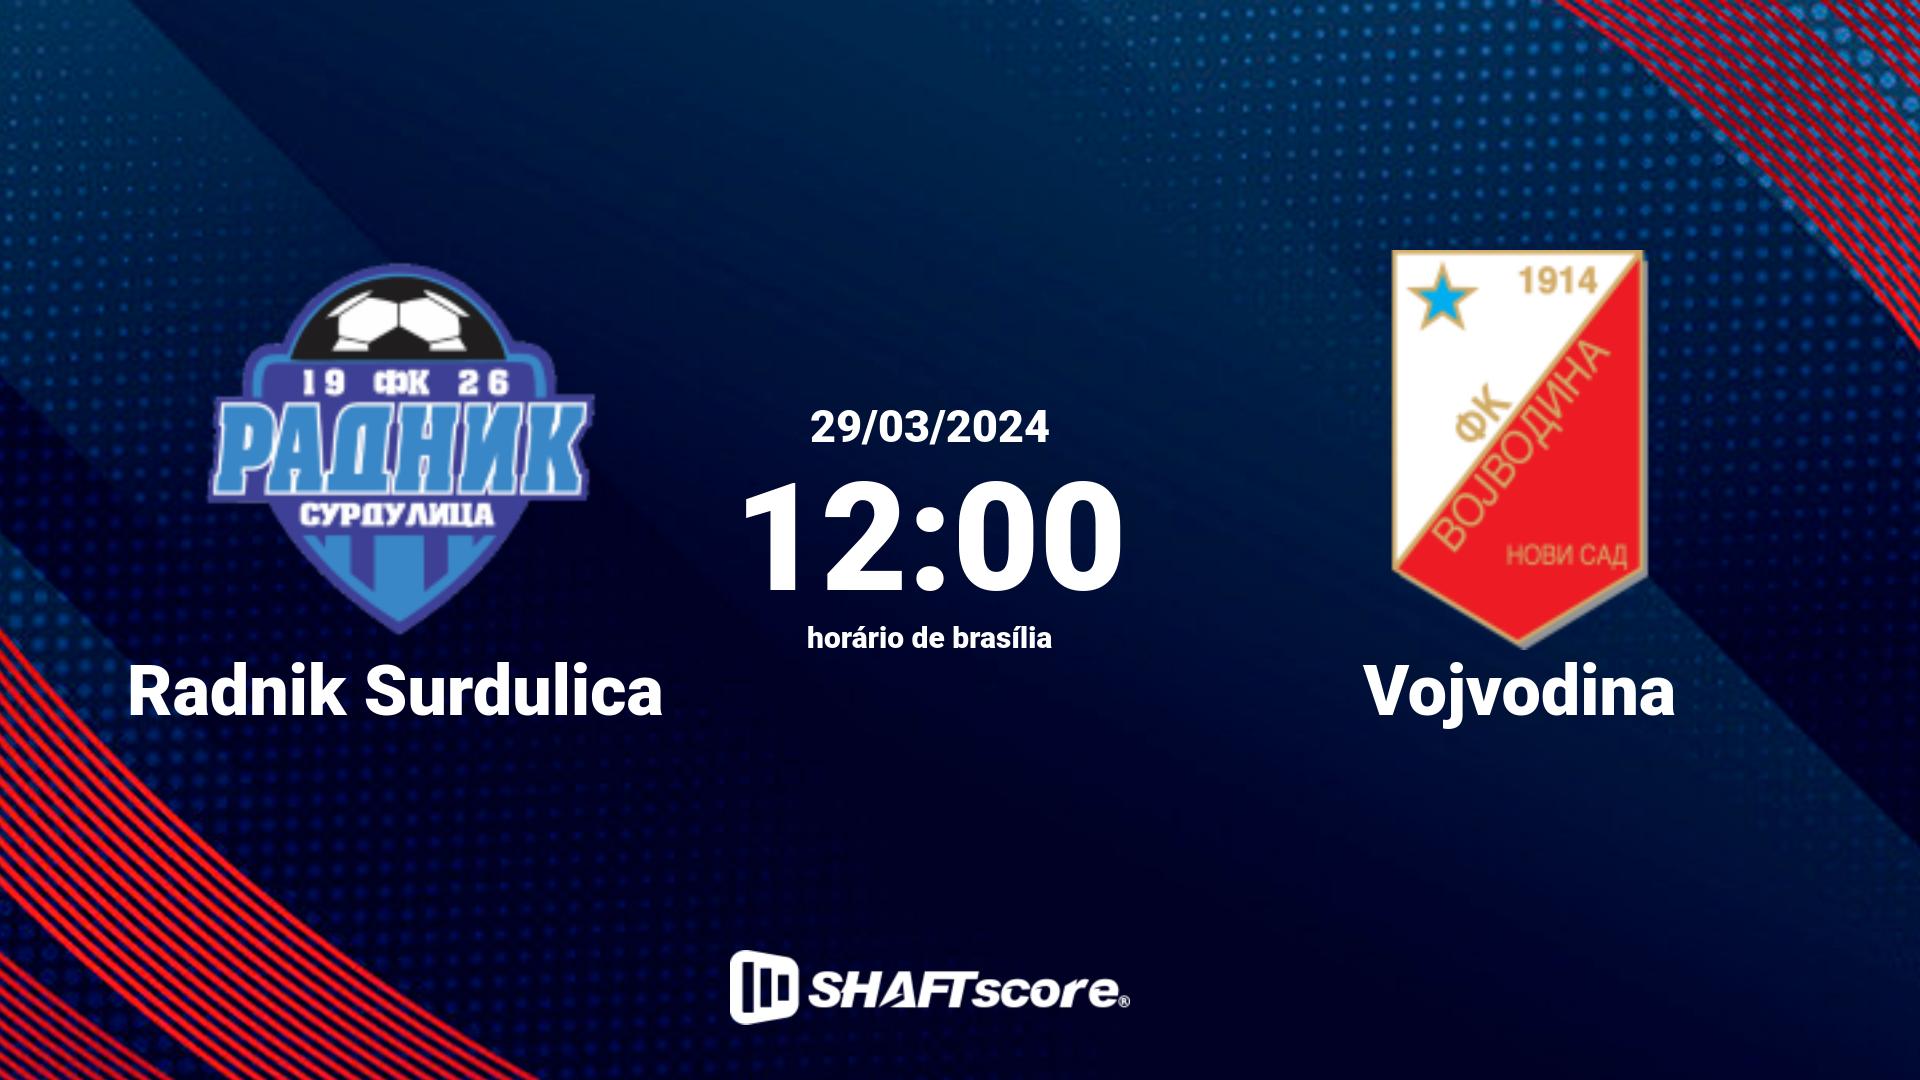 Estatísticas do jogo Radnik Surdulica vs Vojvodina 29.03 12:00